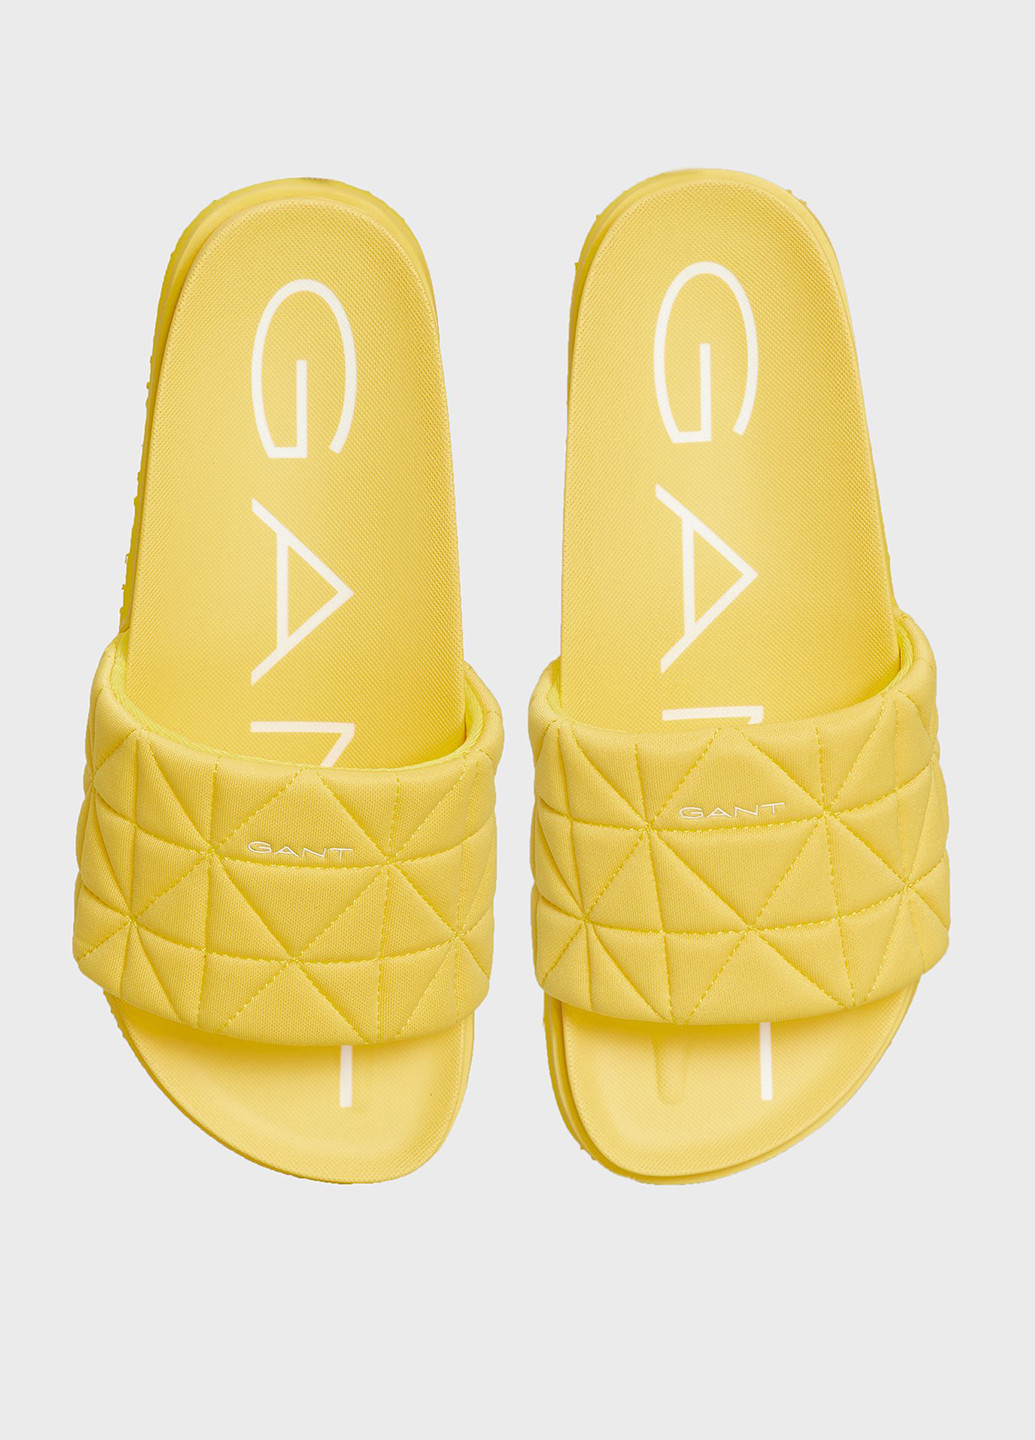 Желтые шлепанцы Gant с логотипом